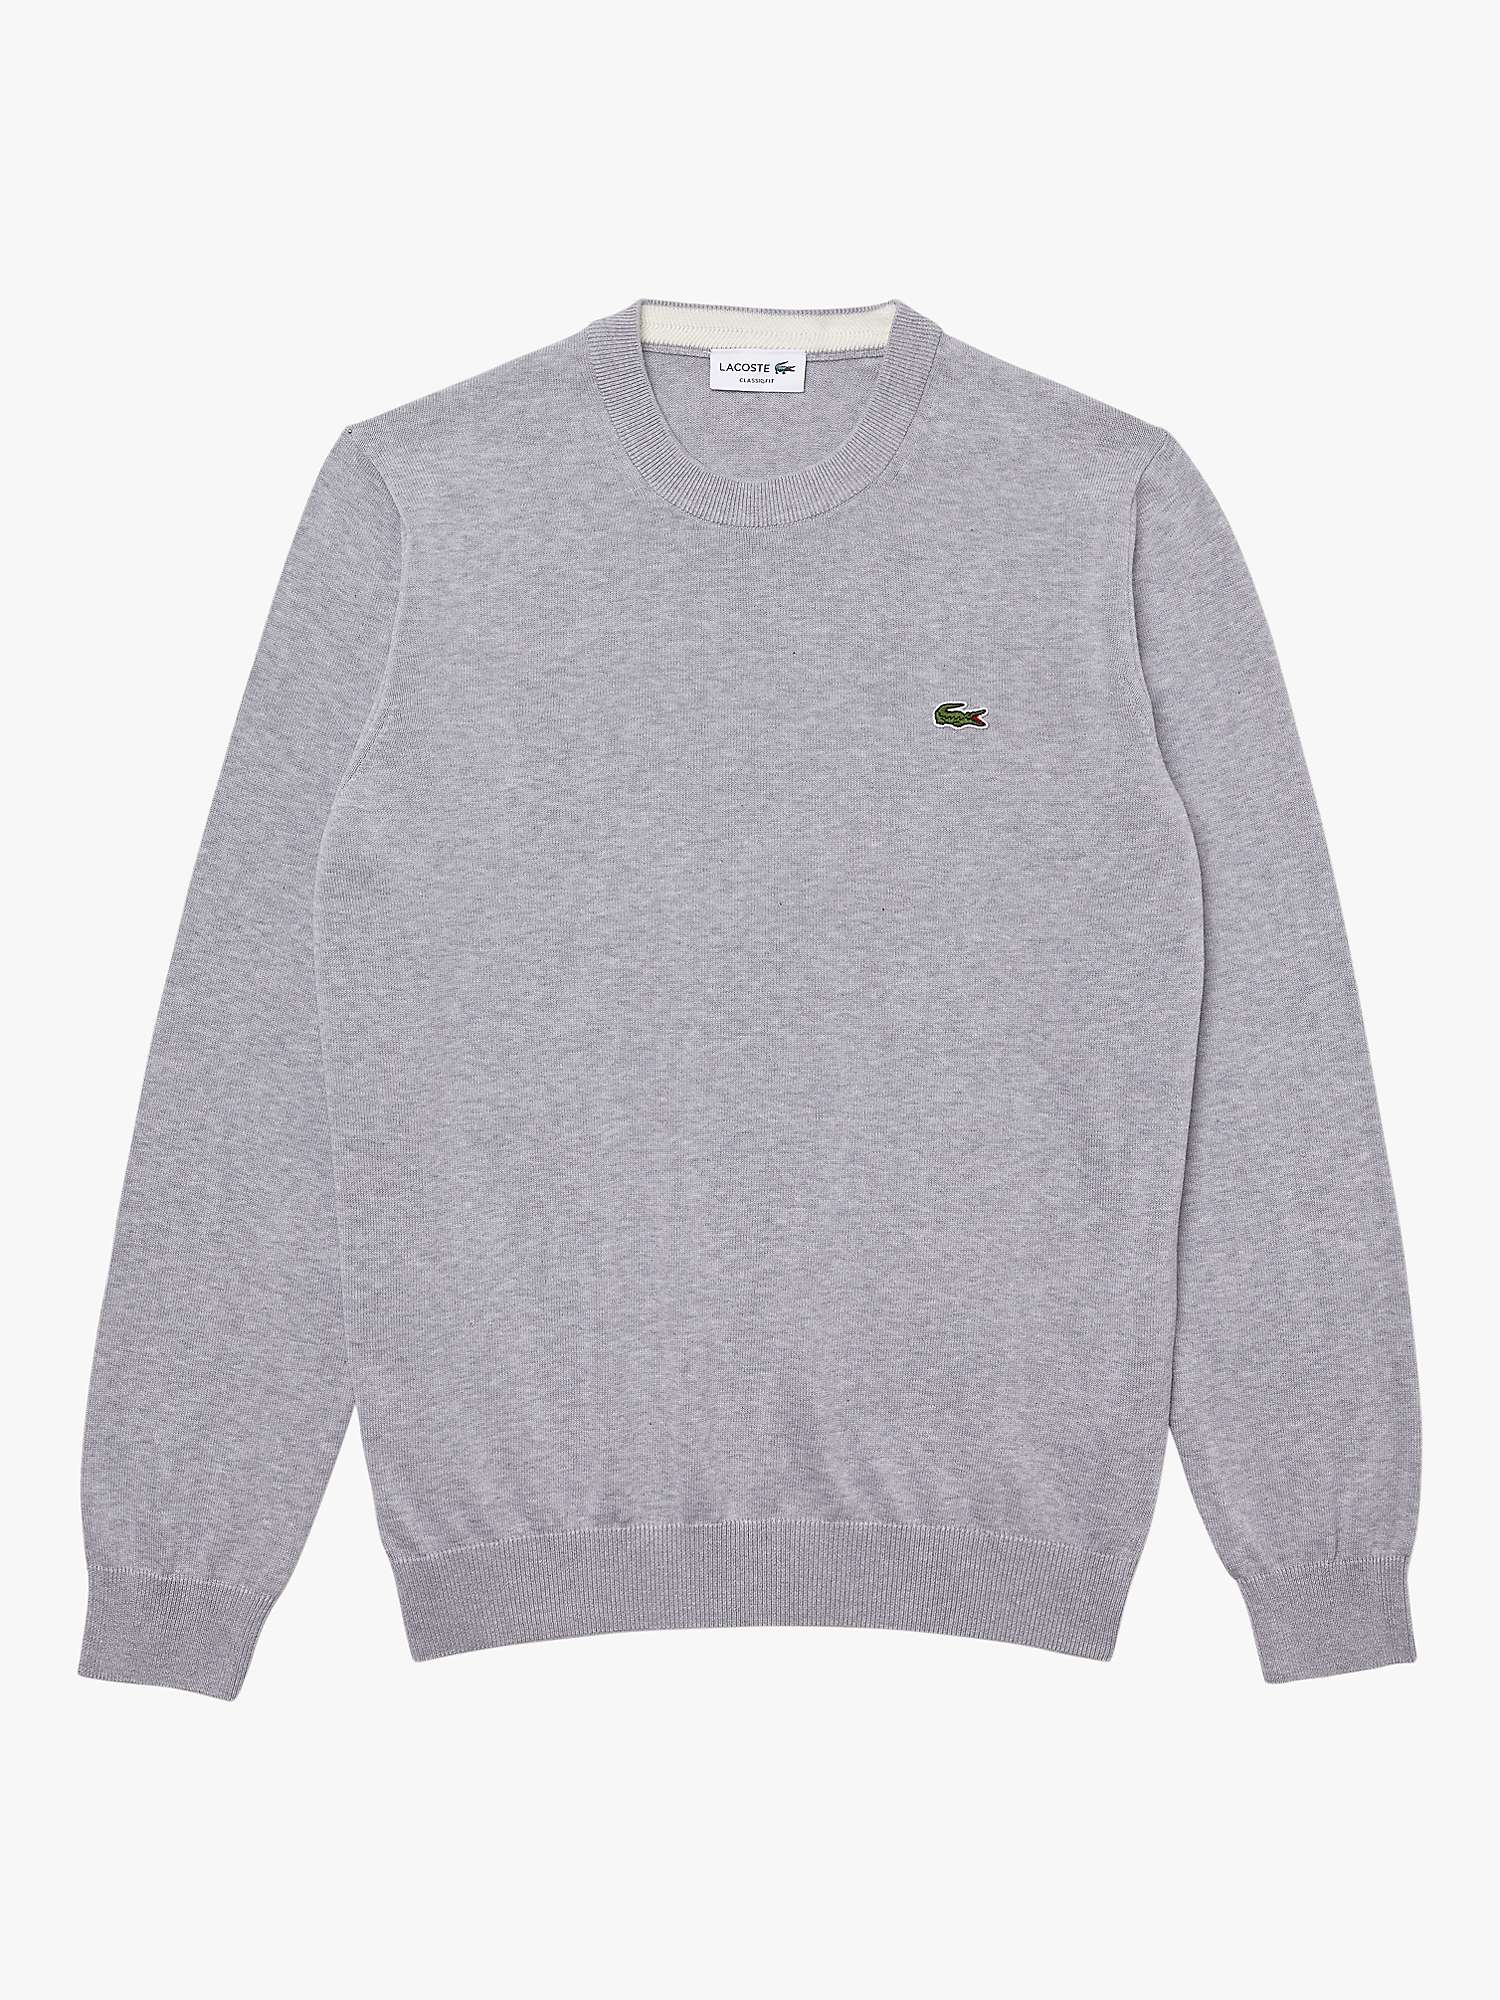 Buy Lacoste Classic Cotton Sweatshirt Online at johnlewis.com